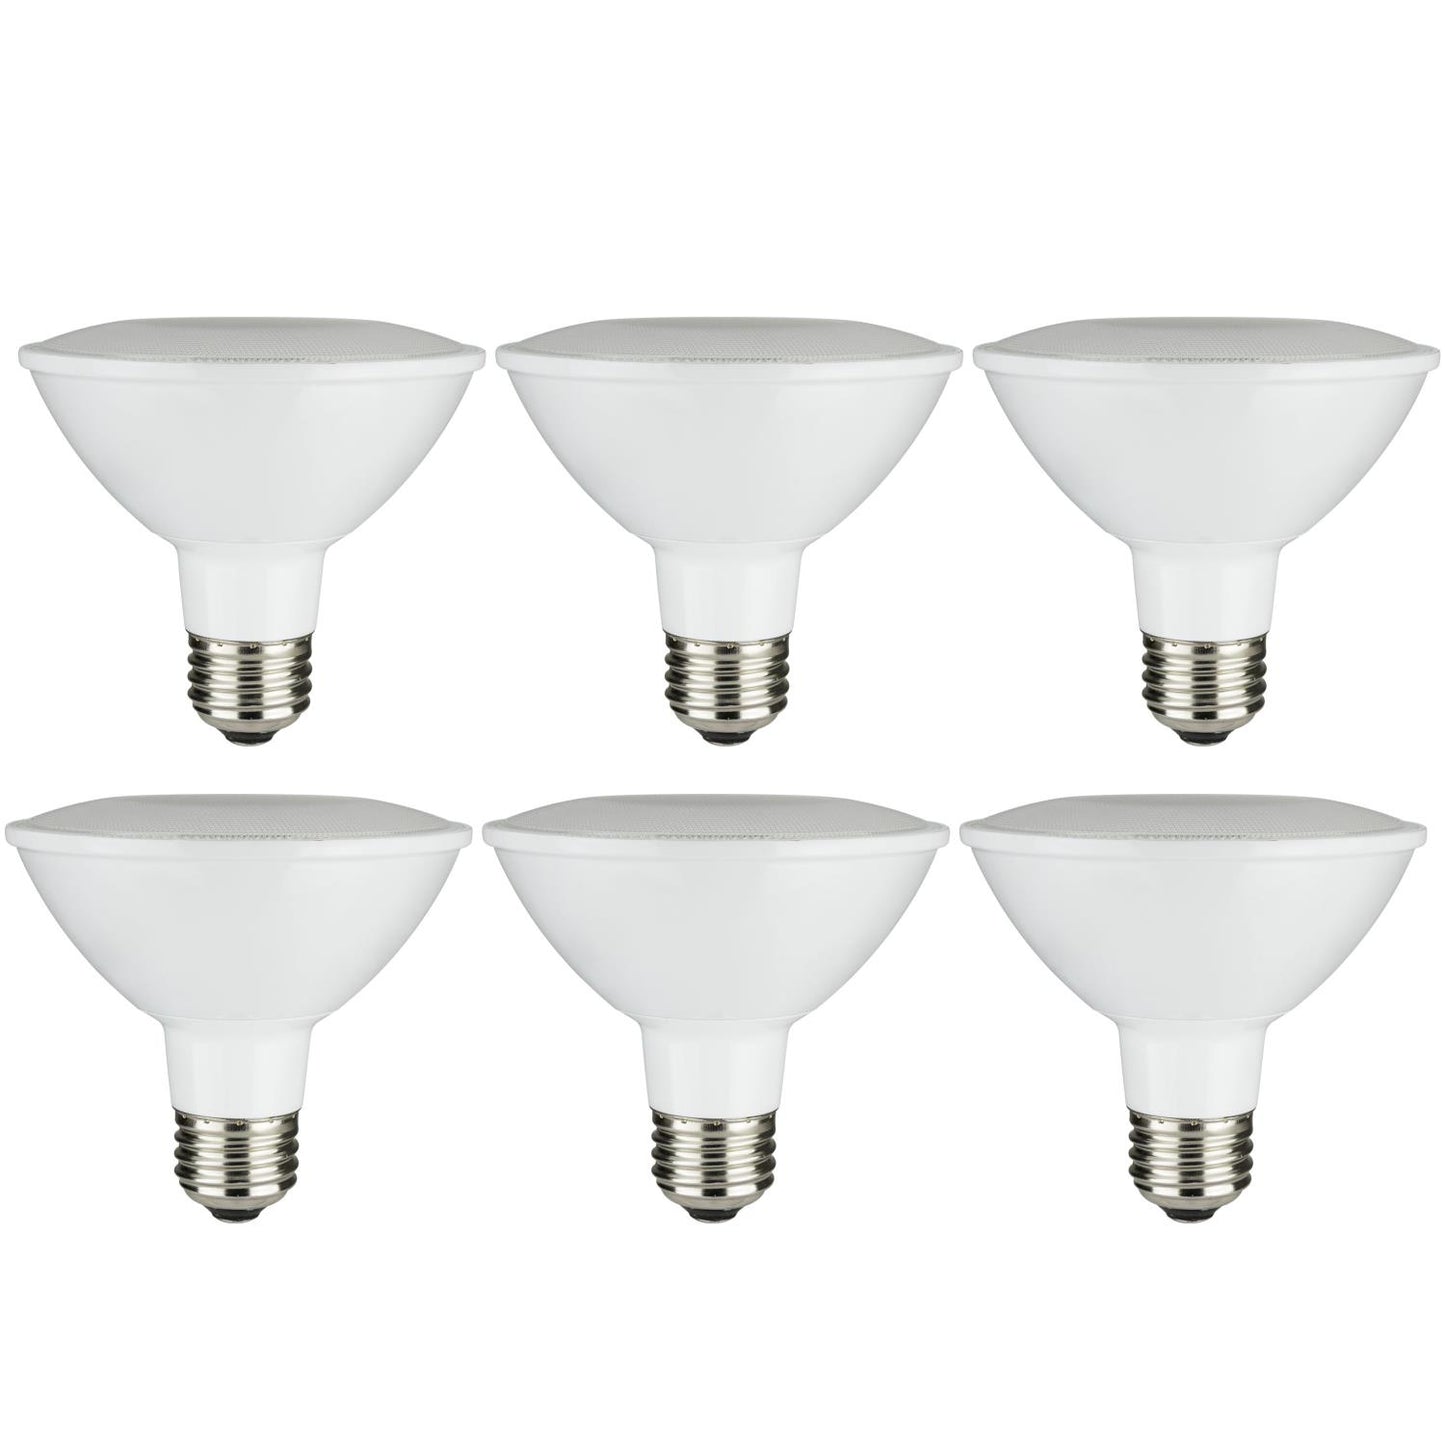 Sunlite LED PAR30 Reflector 13.5W (75W Equivalent) Light Bulb Medium (E26) Base, Cool White